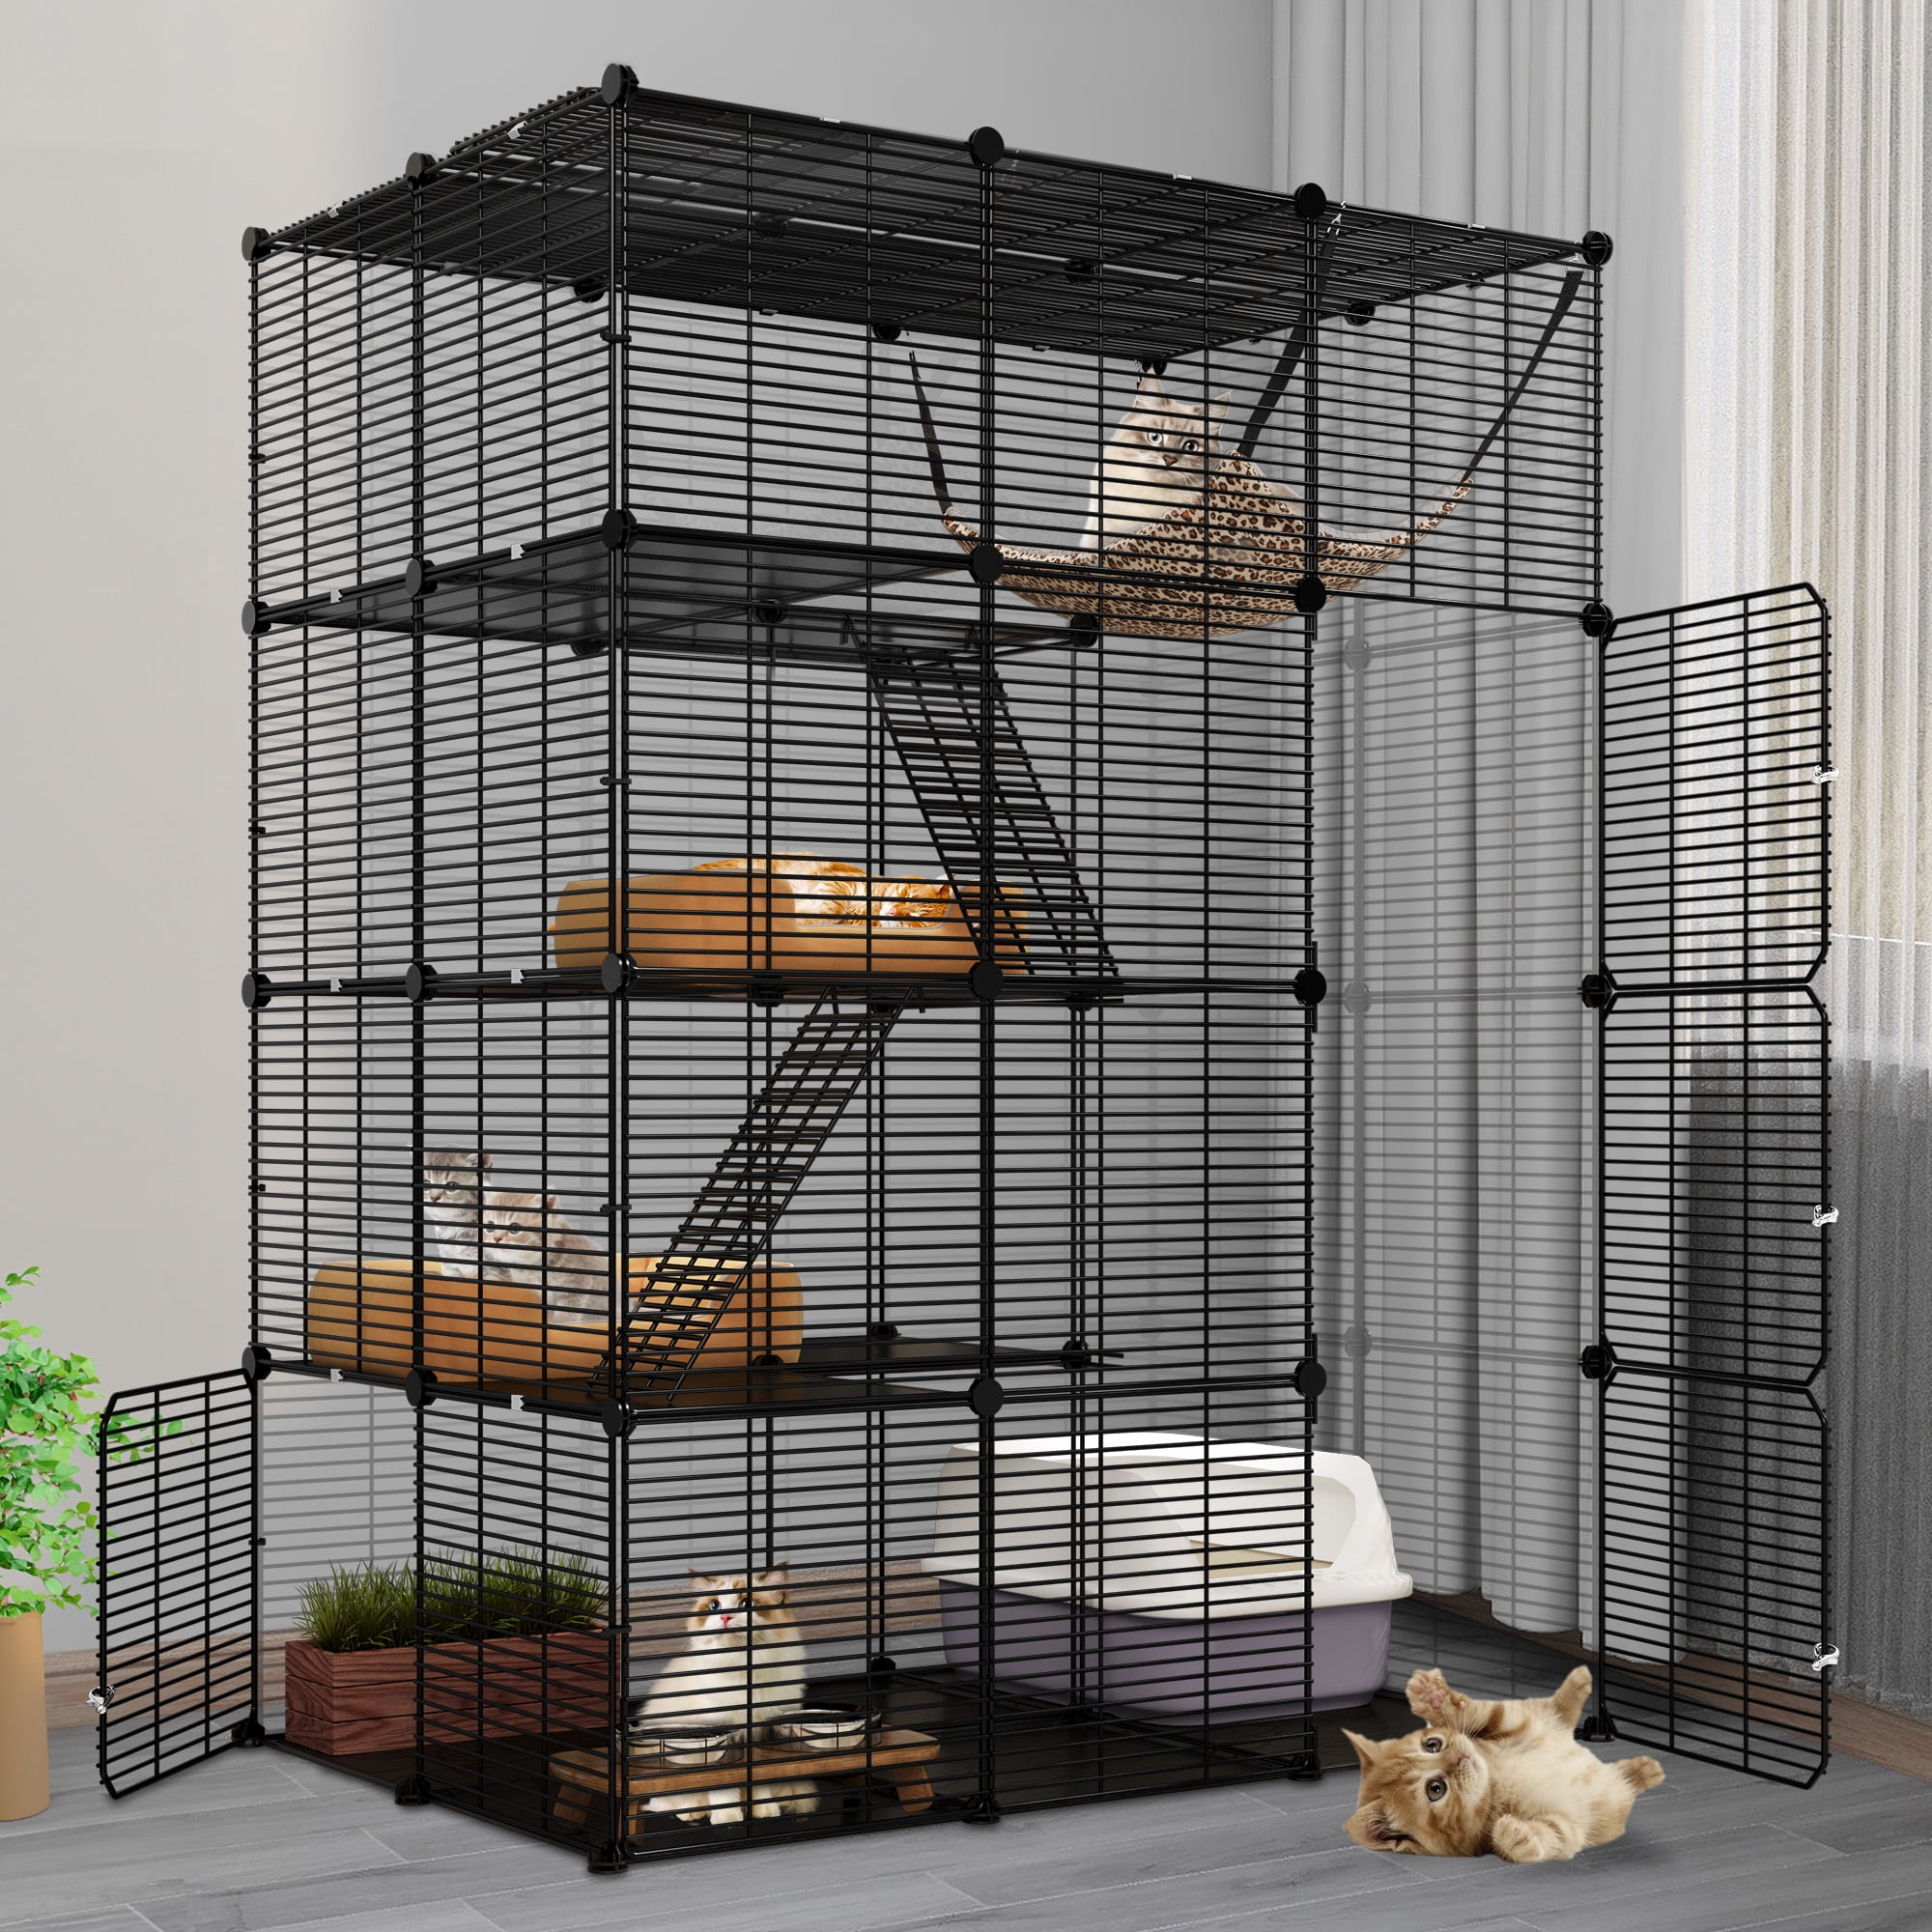 Dextrus Cat Cage Indoor Large With Hammock 4 Tier Outdoor Cat Enclosure 